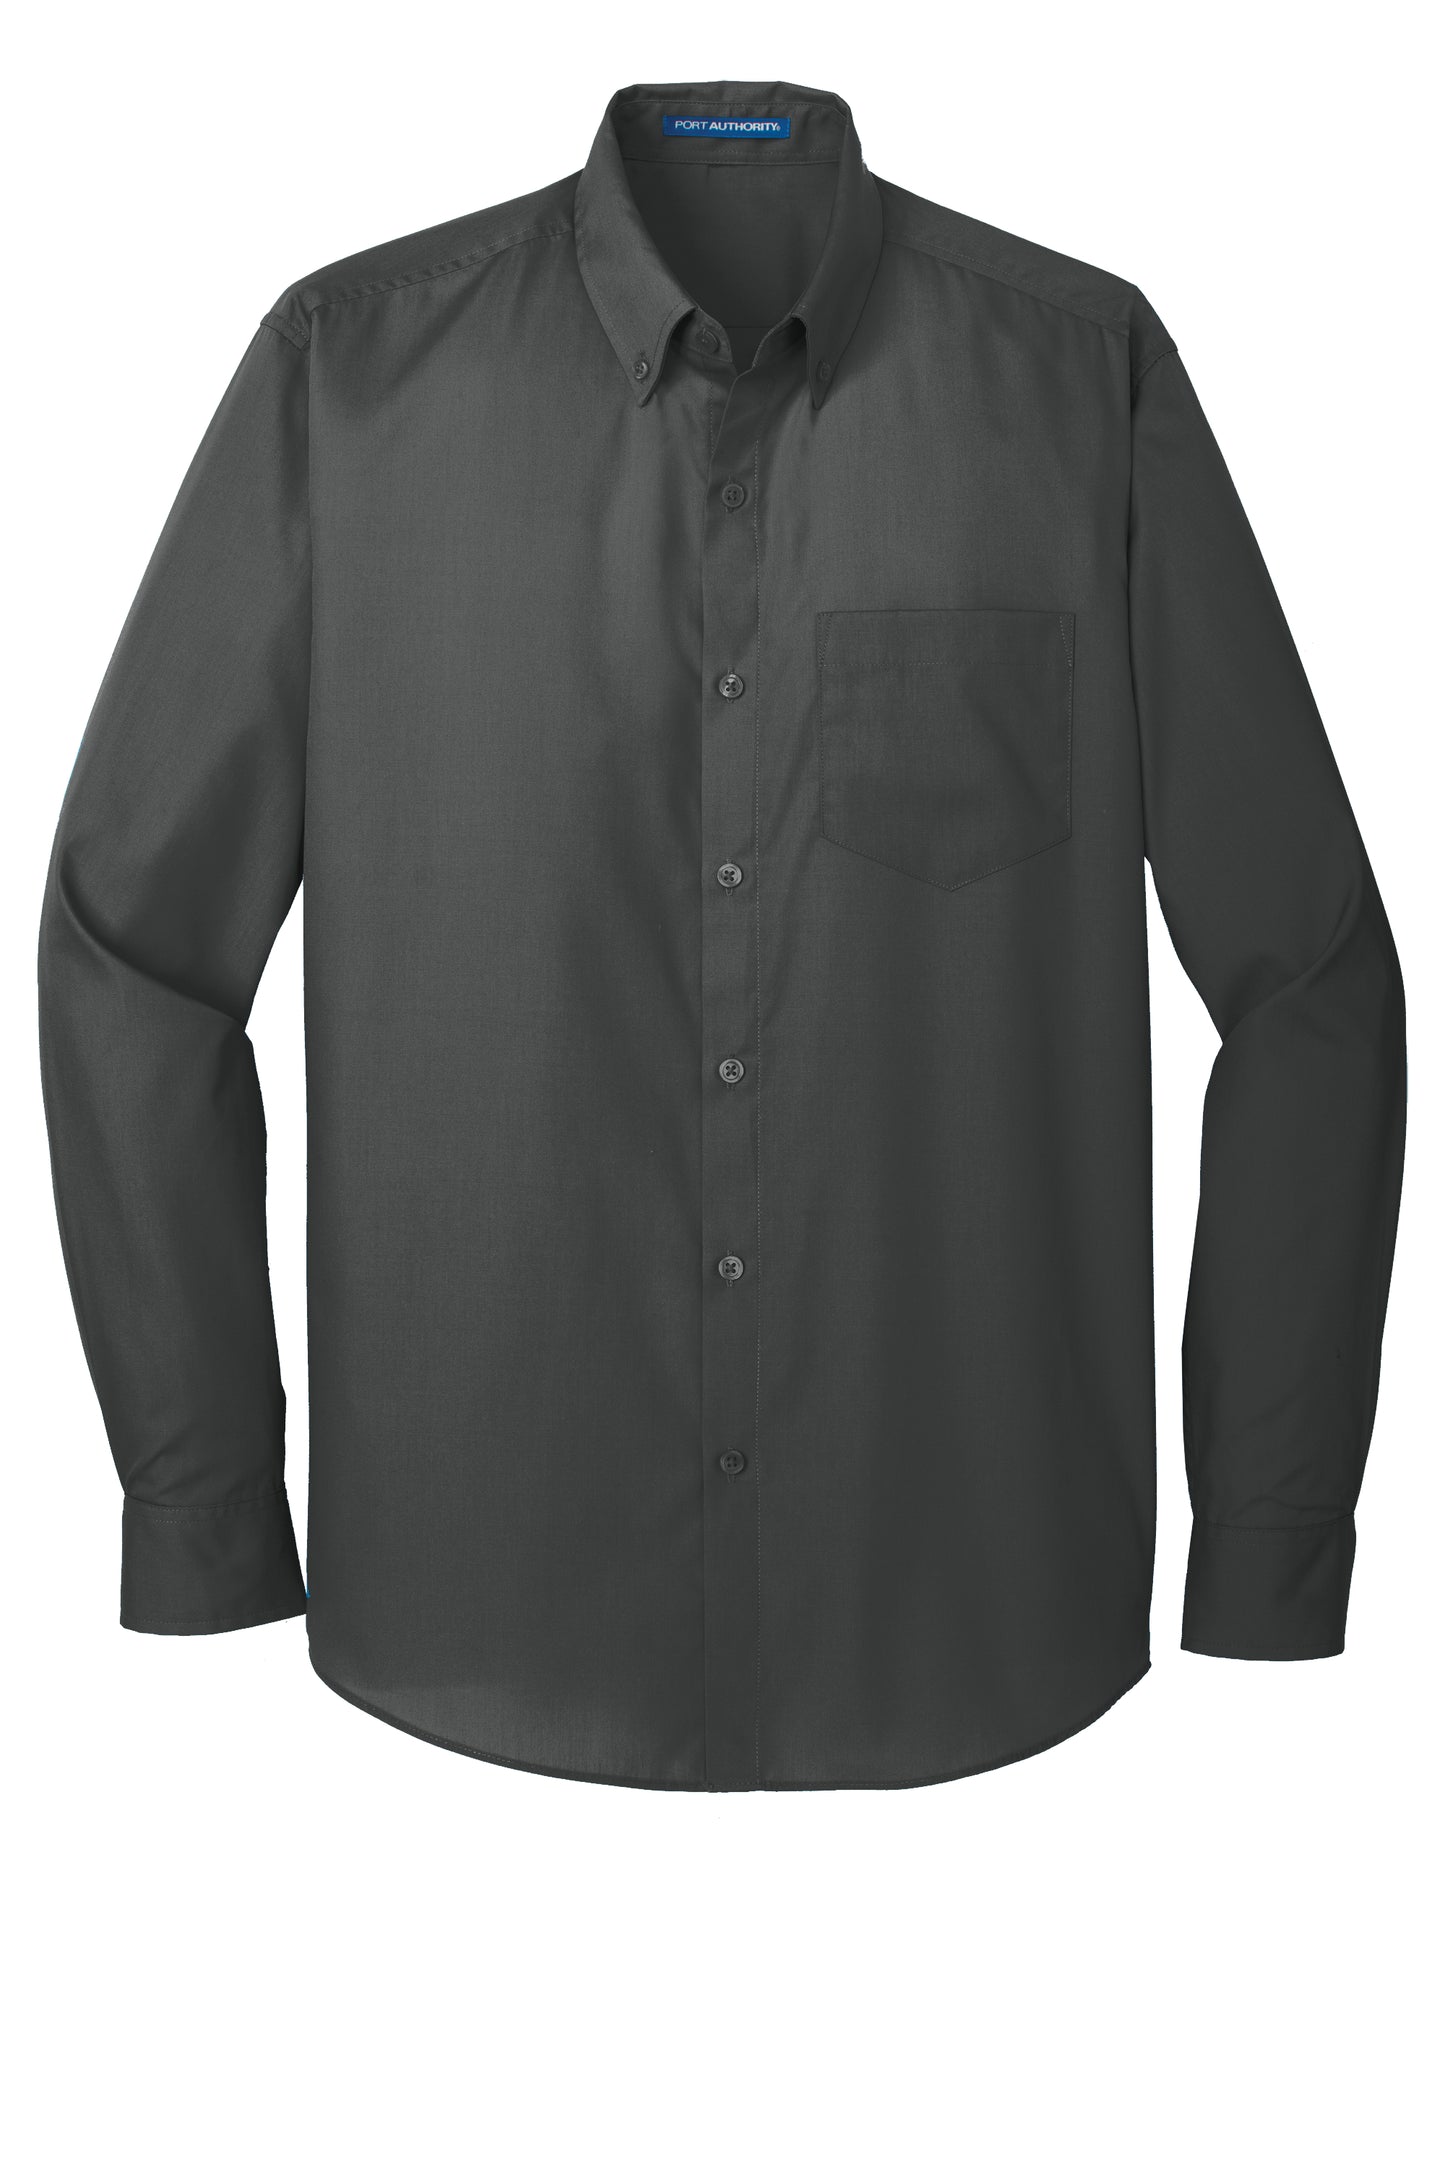 port authority long sleeve carefree poplin shirt graphite grey